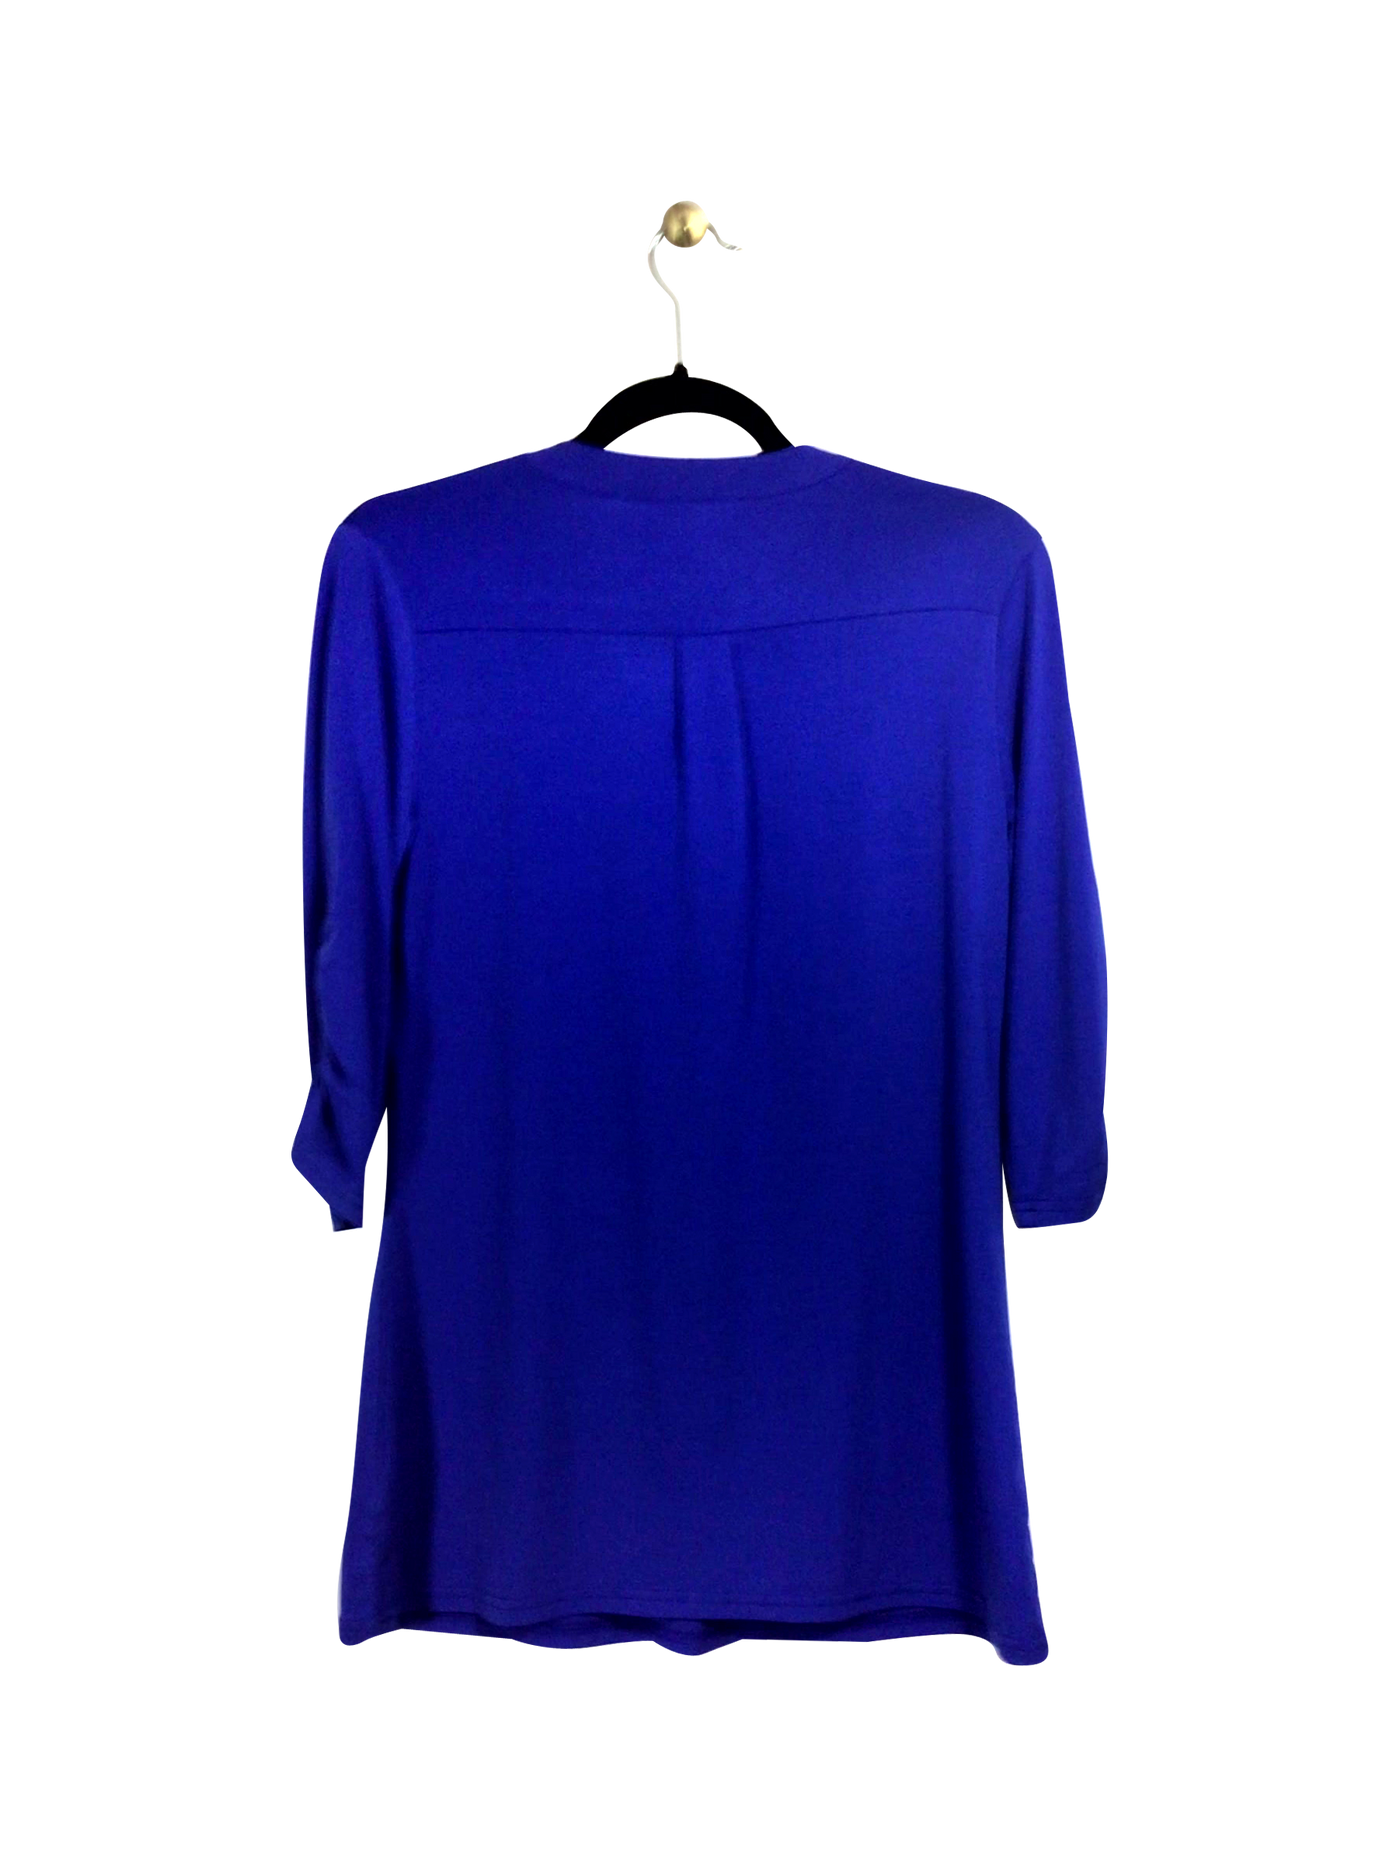 GEORGE T-shirt Regular fit in Blue - Size S | 7.99 $ KOOP